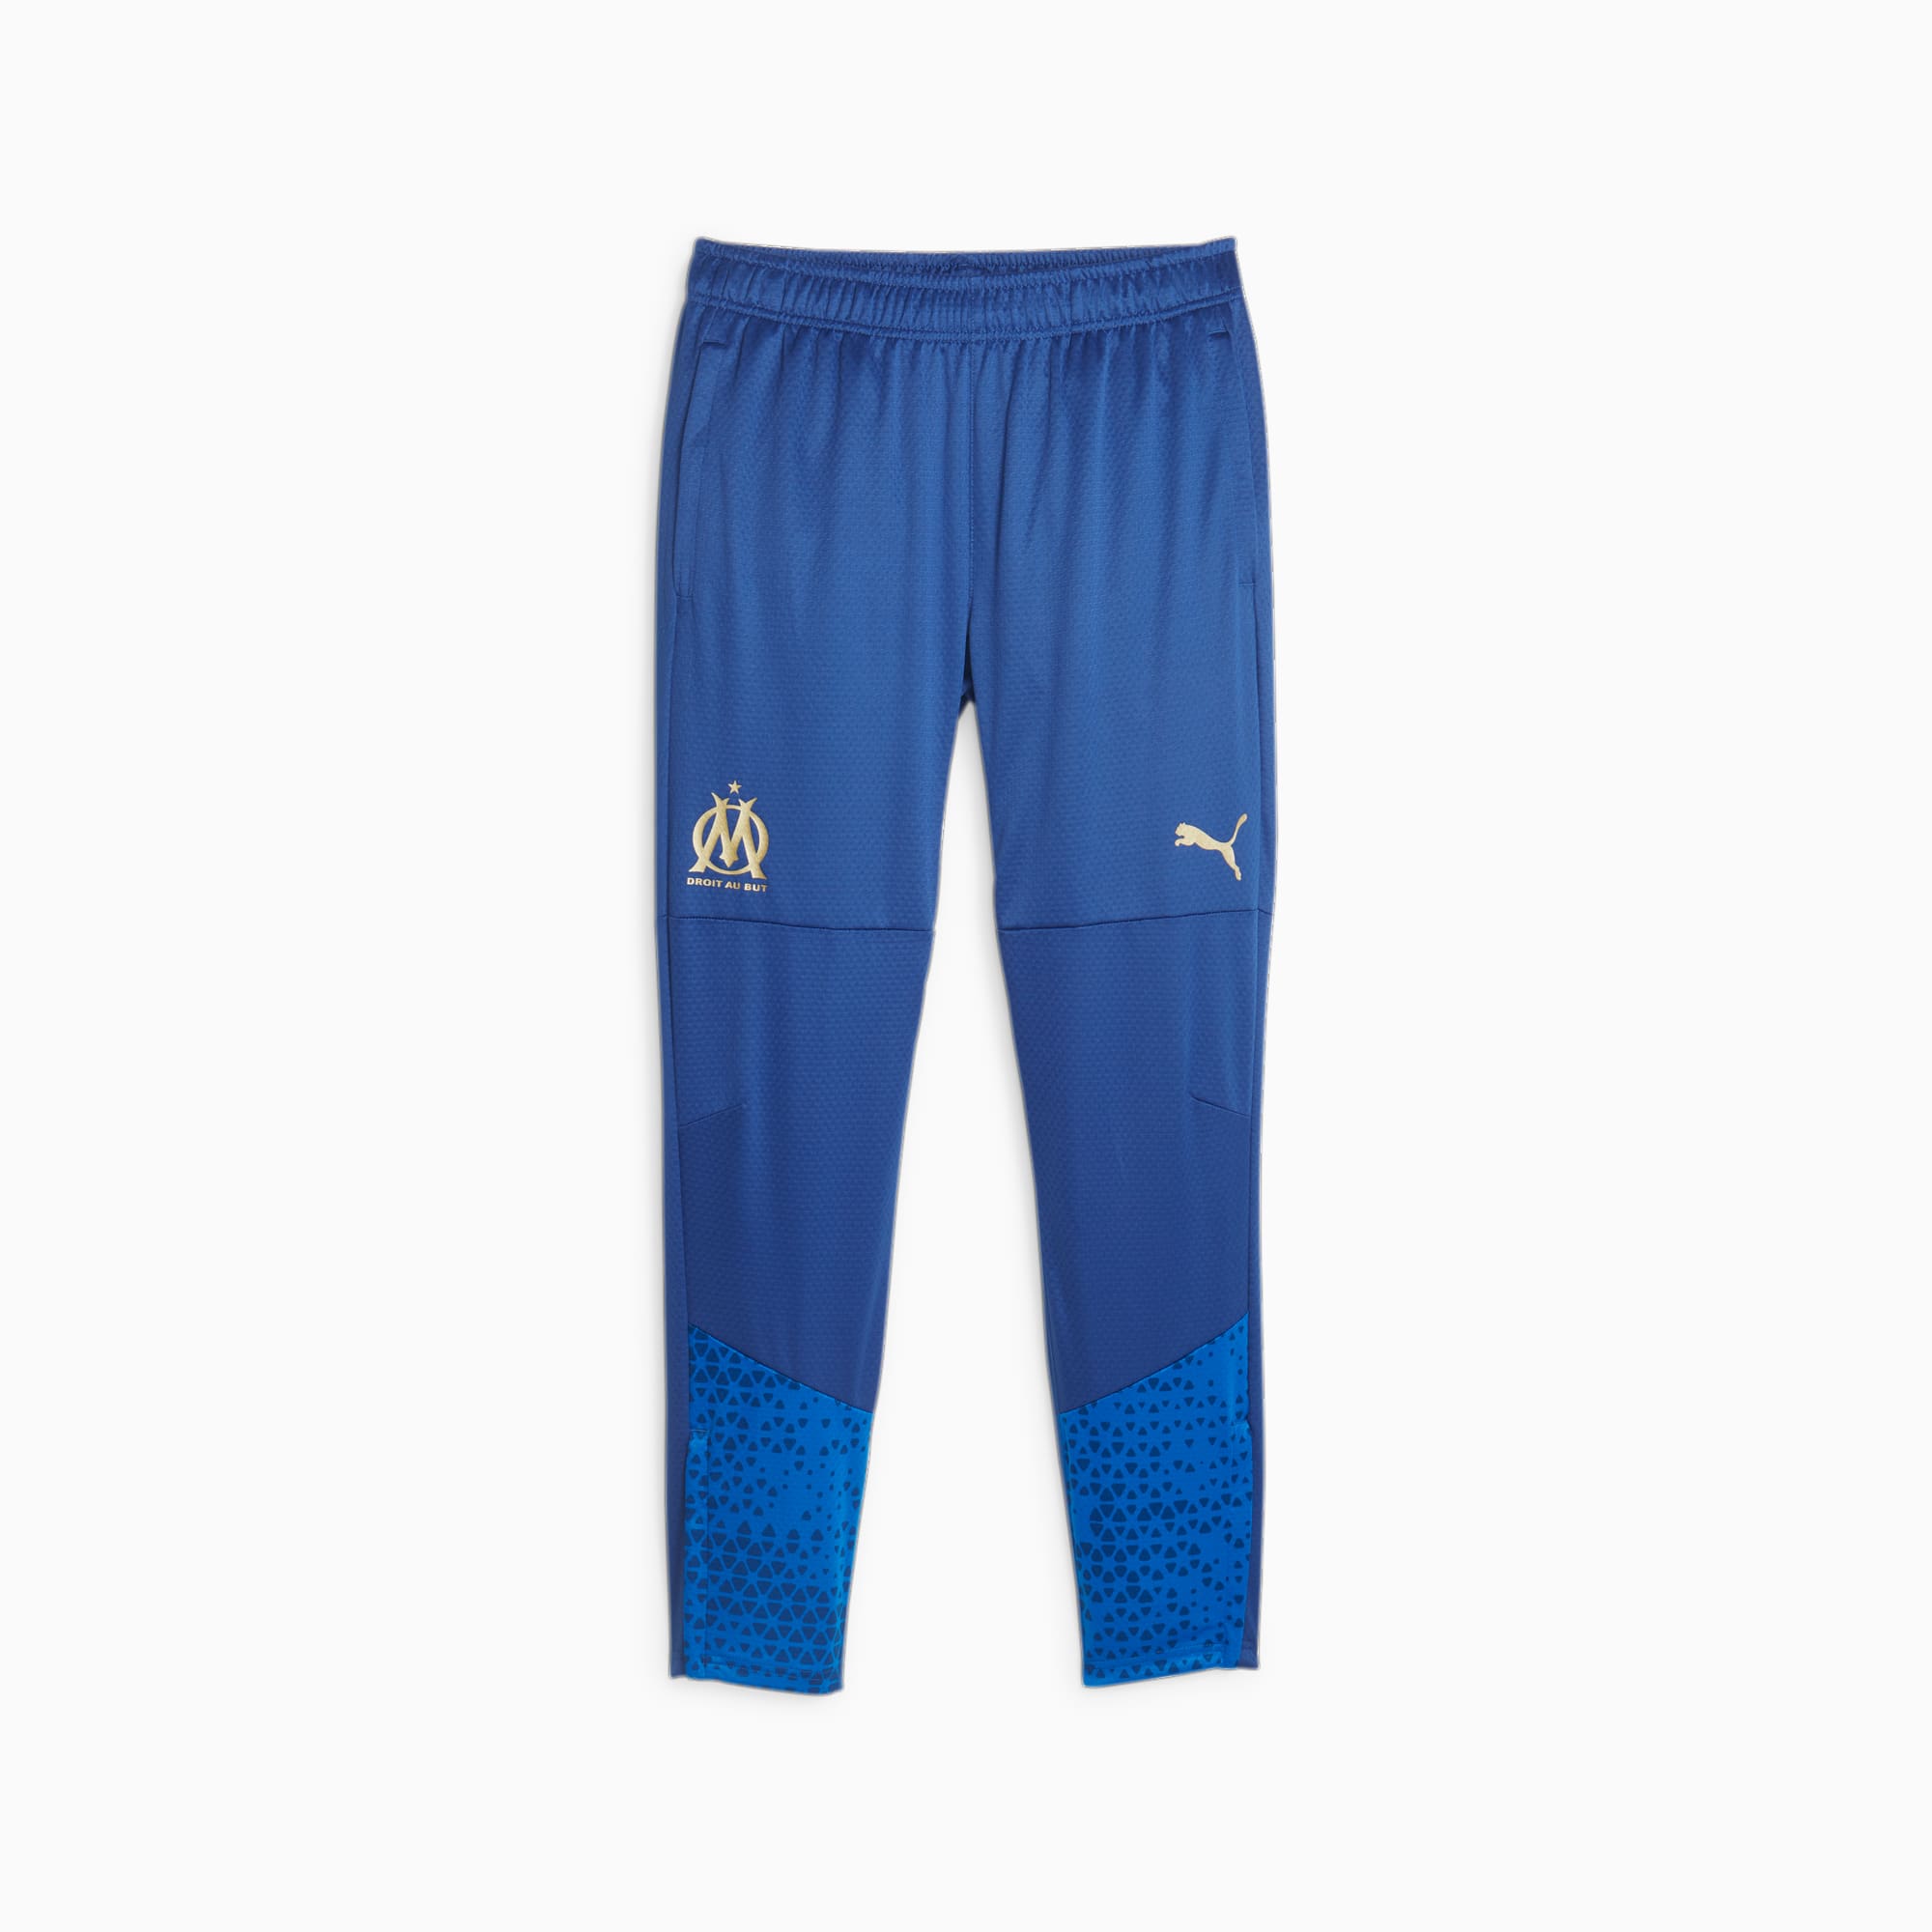 Men's PUMA Olympique De Marseille Football Training Pants, Royal Blue, Size L, Clothing